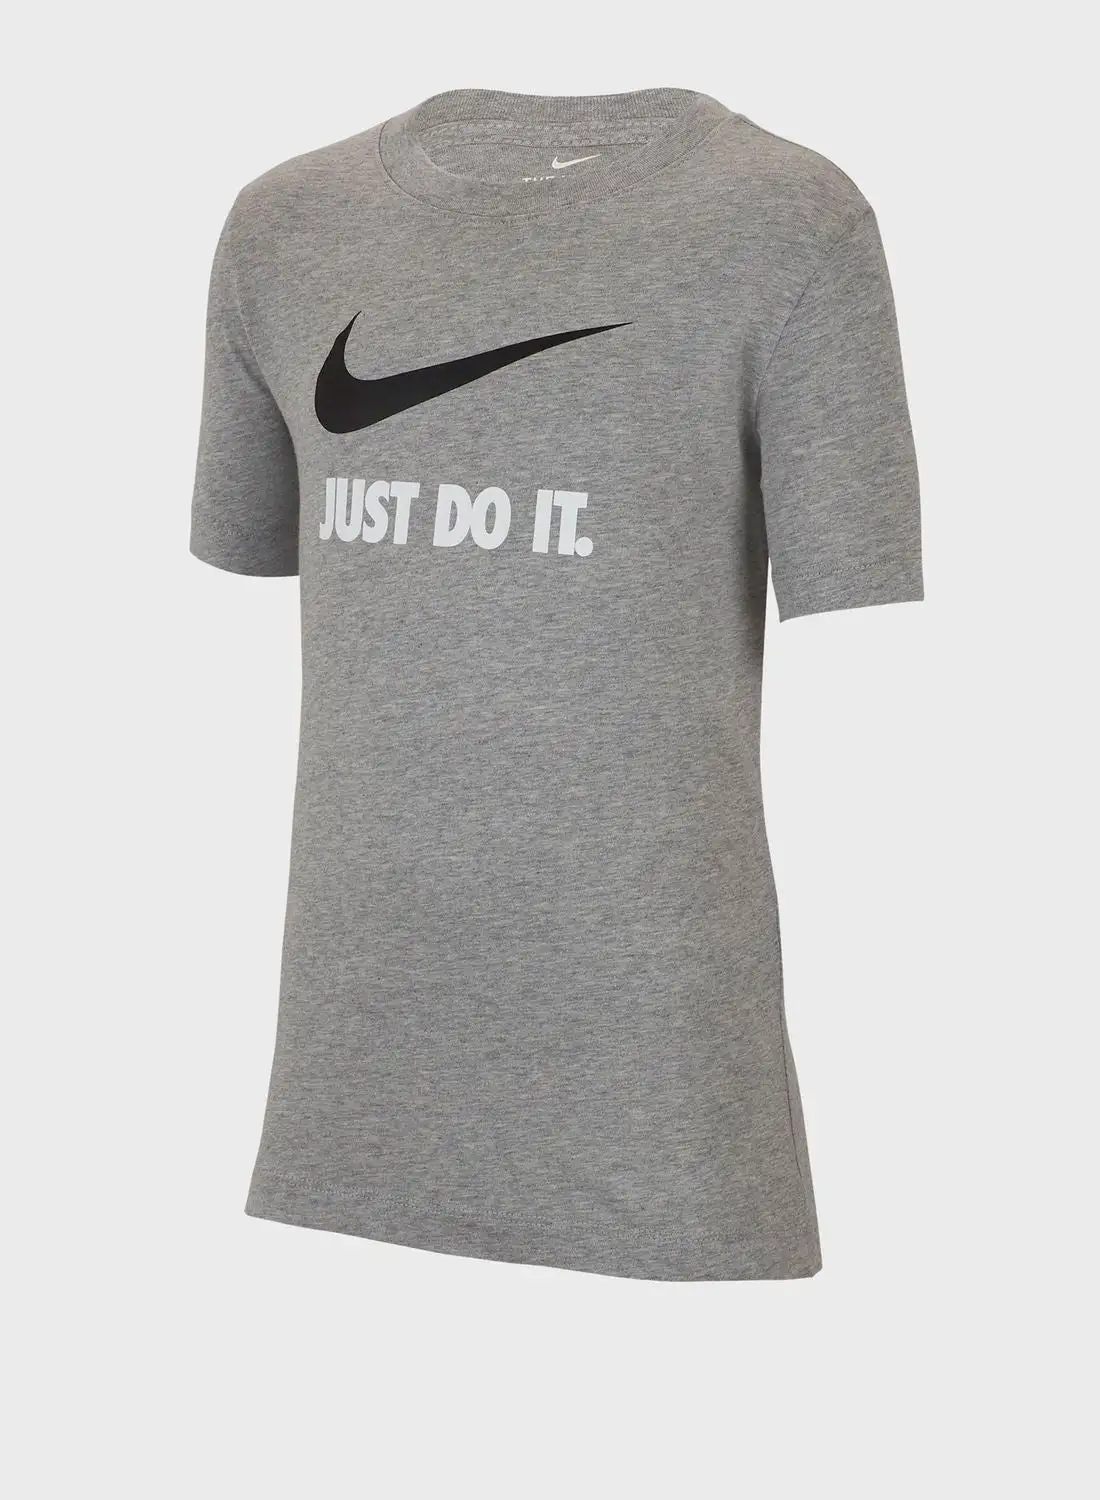 Nike Youth NSW Just Do It Swoosh T-Shirt